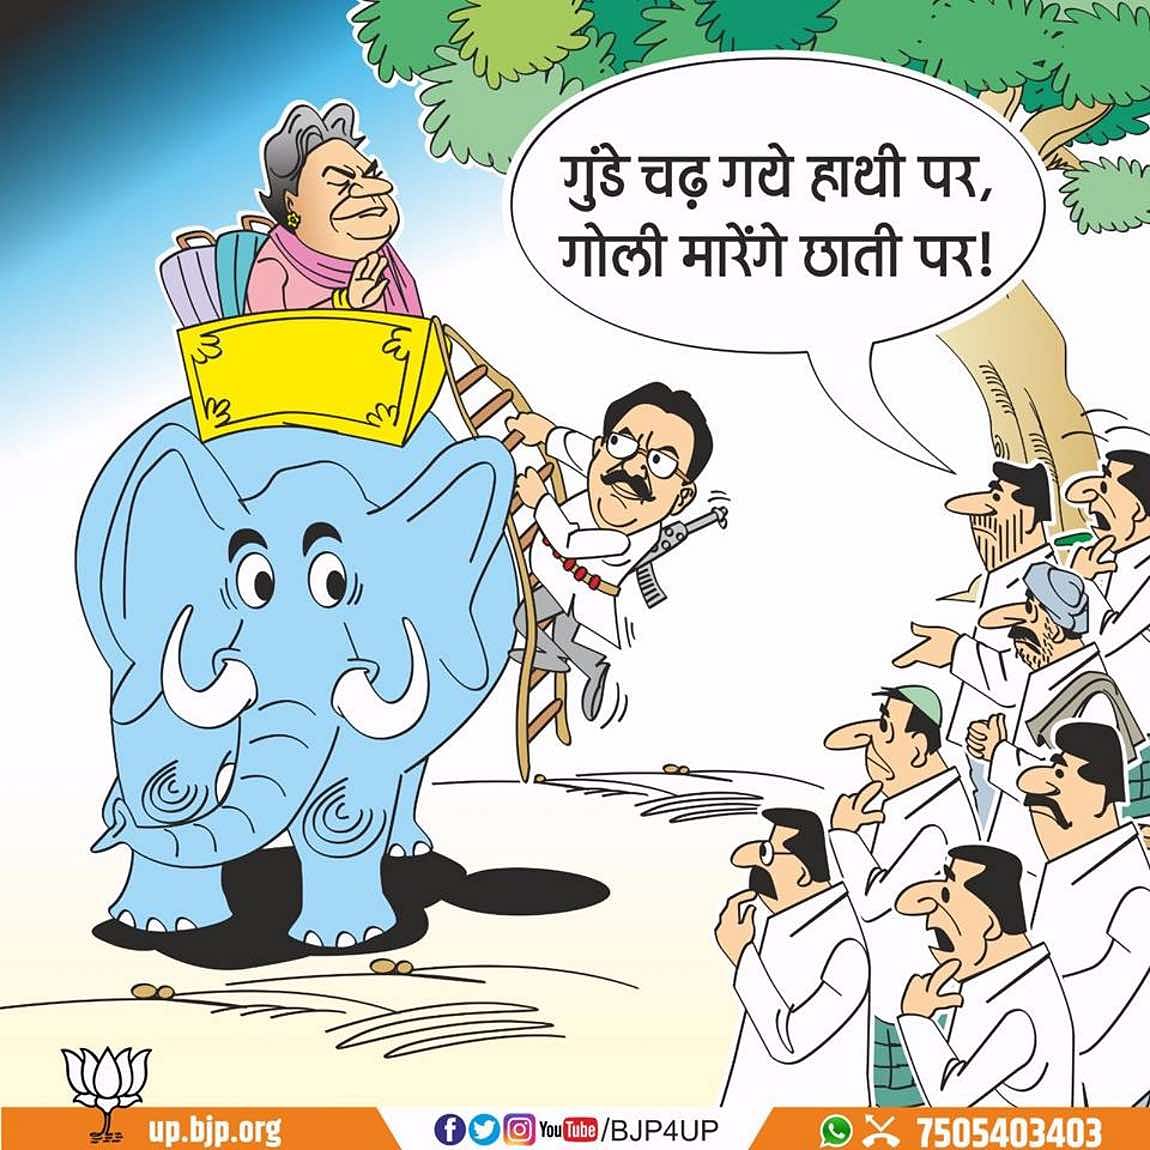 Mukhtar Ansari's Move to BSP Will Affect Mayawati's Clean Image